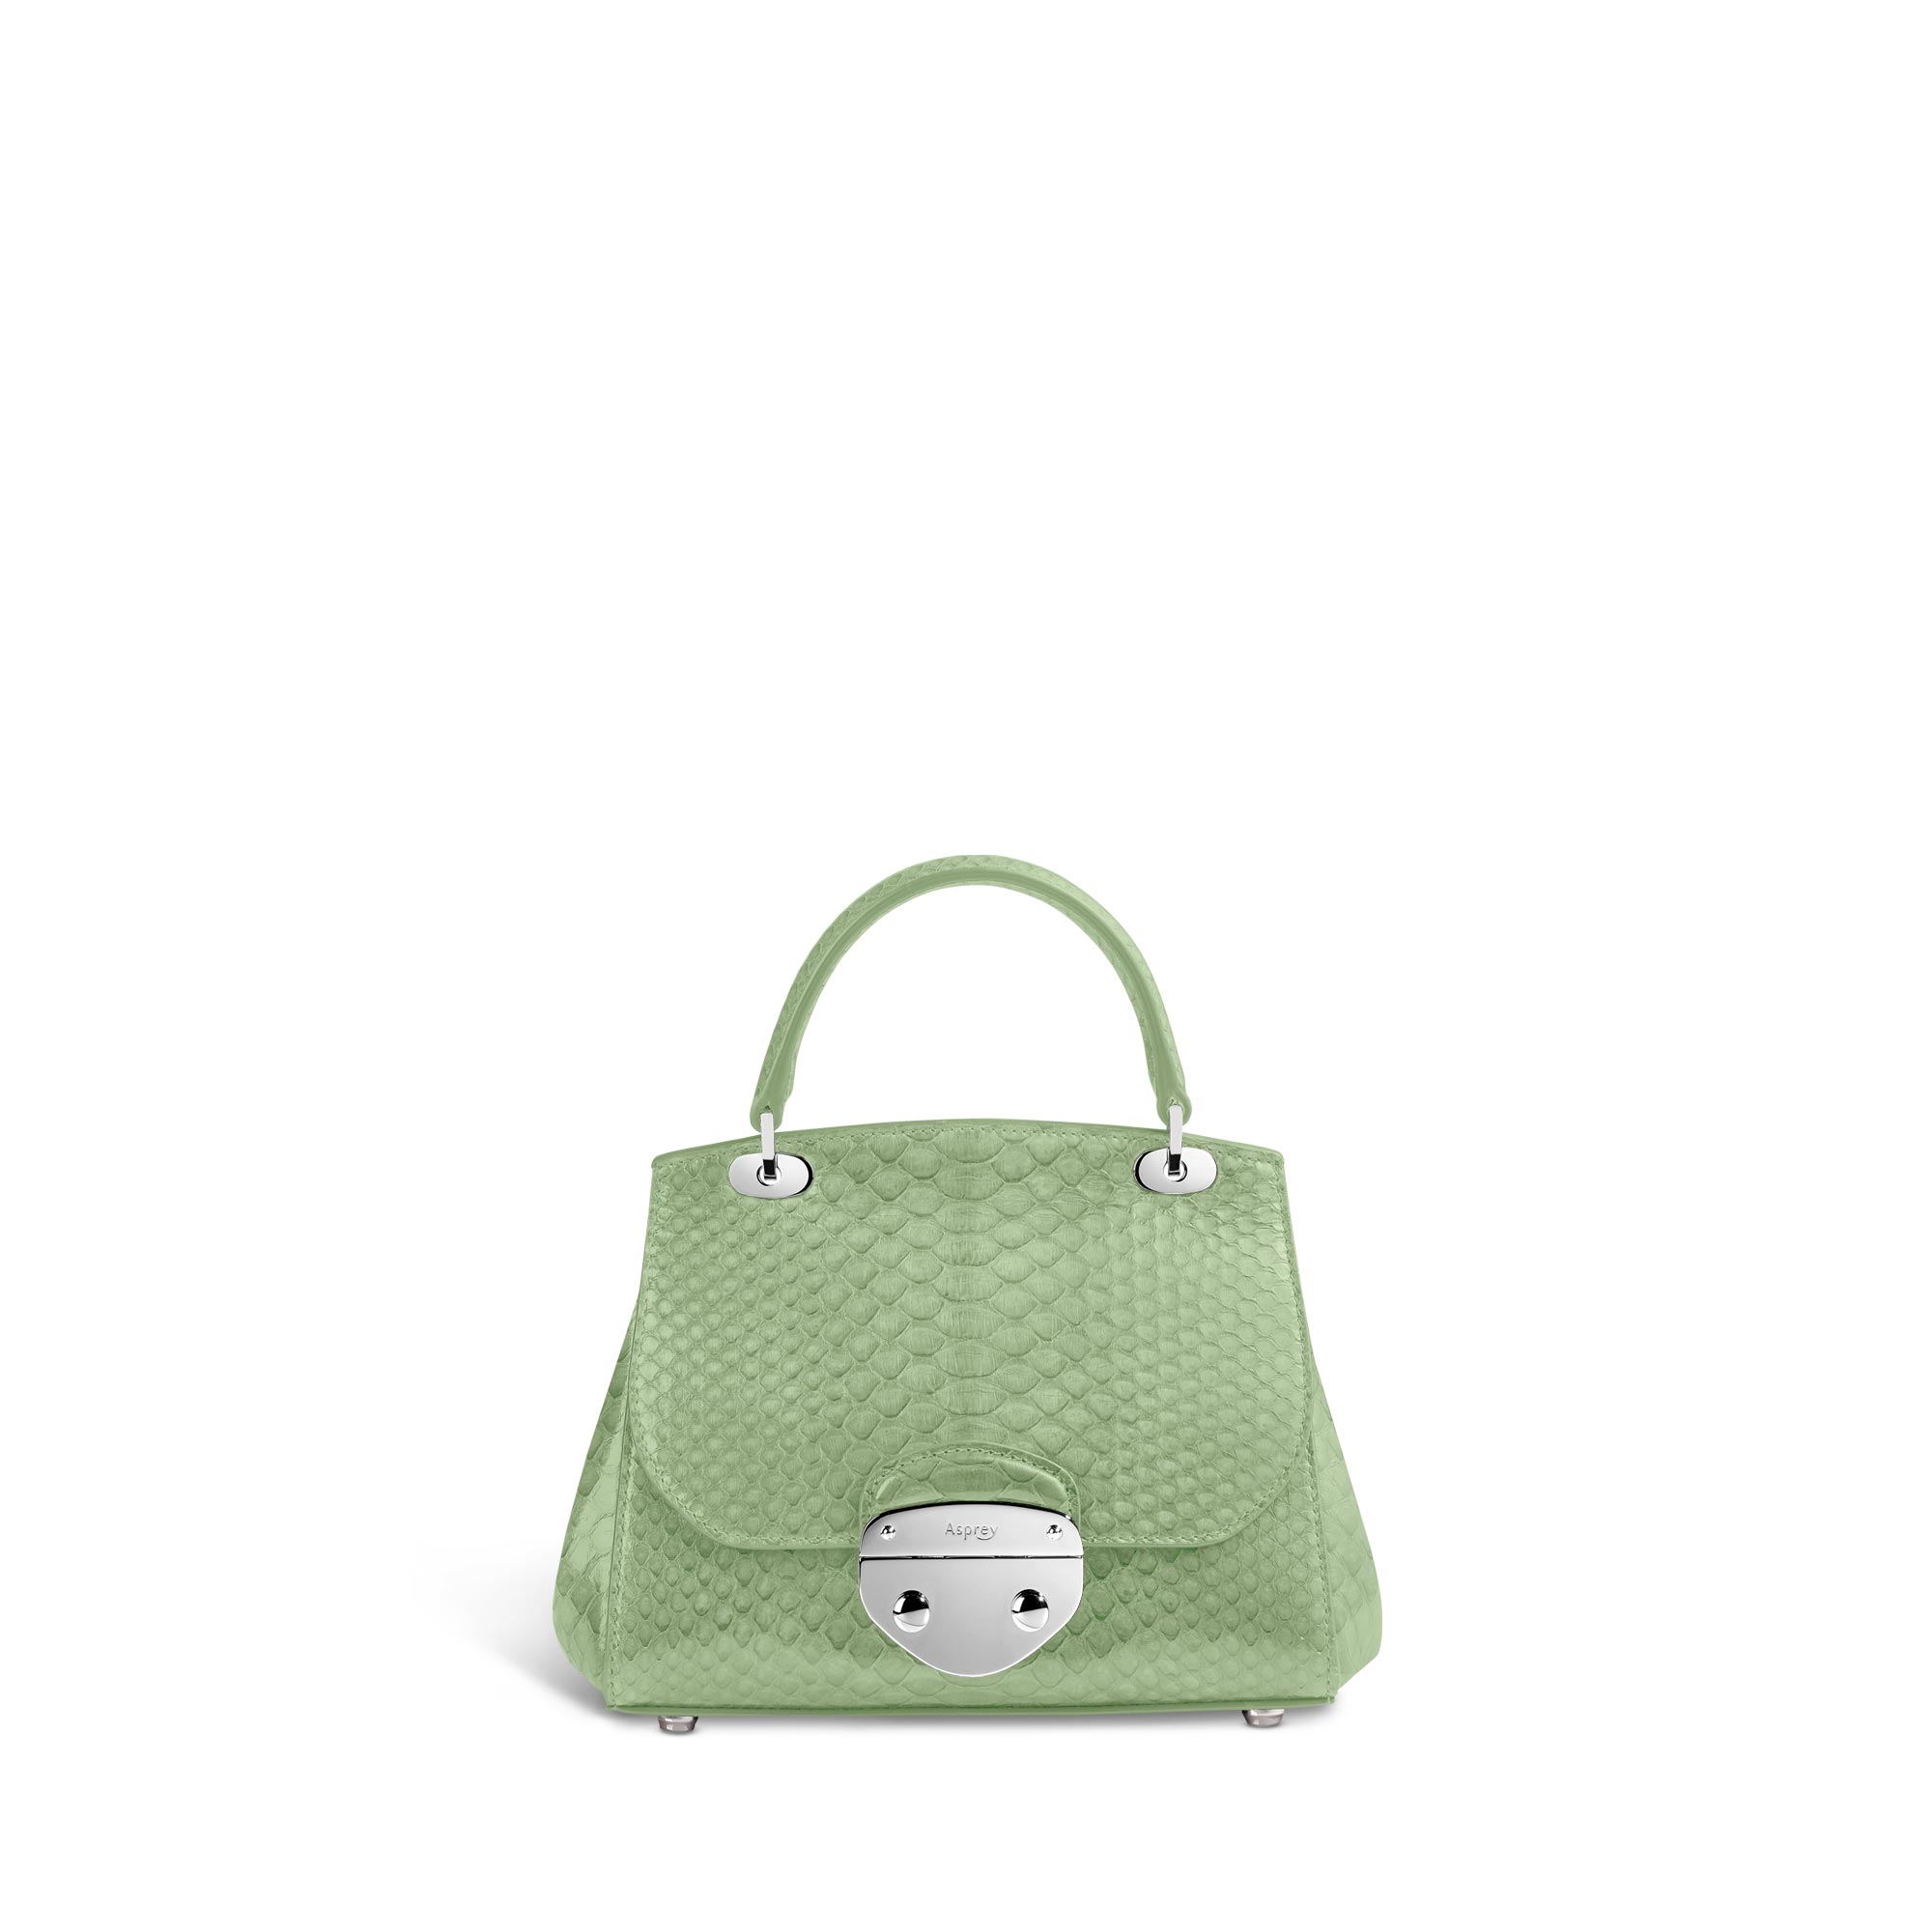 Belle Mini Handbag in Green Python